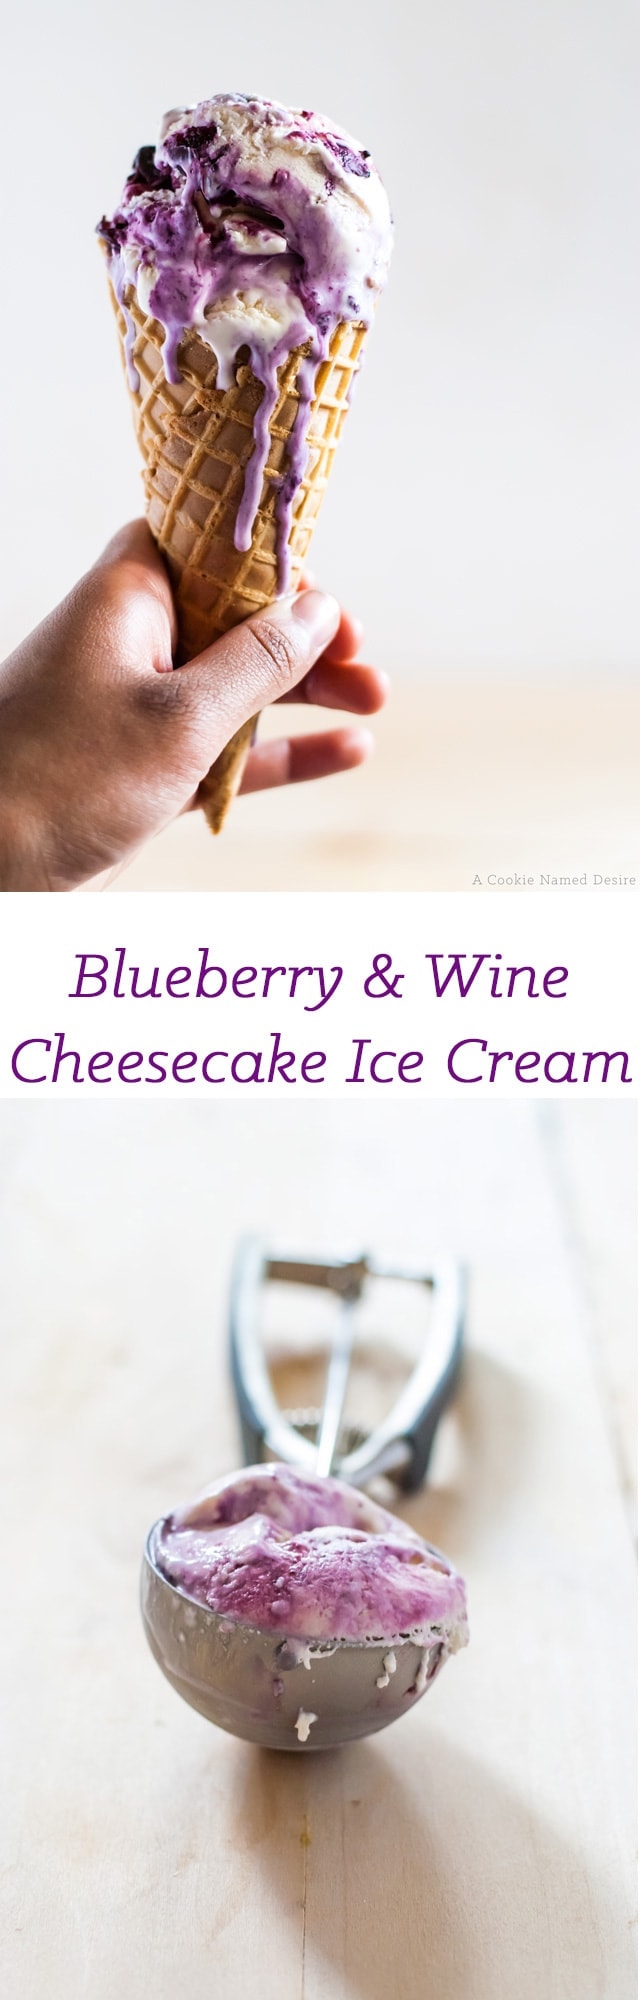 blueberry wine cheesecake ice cream